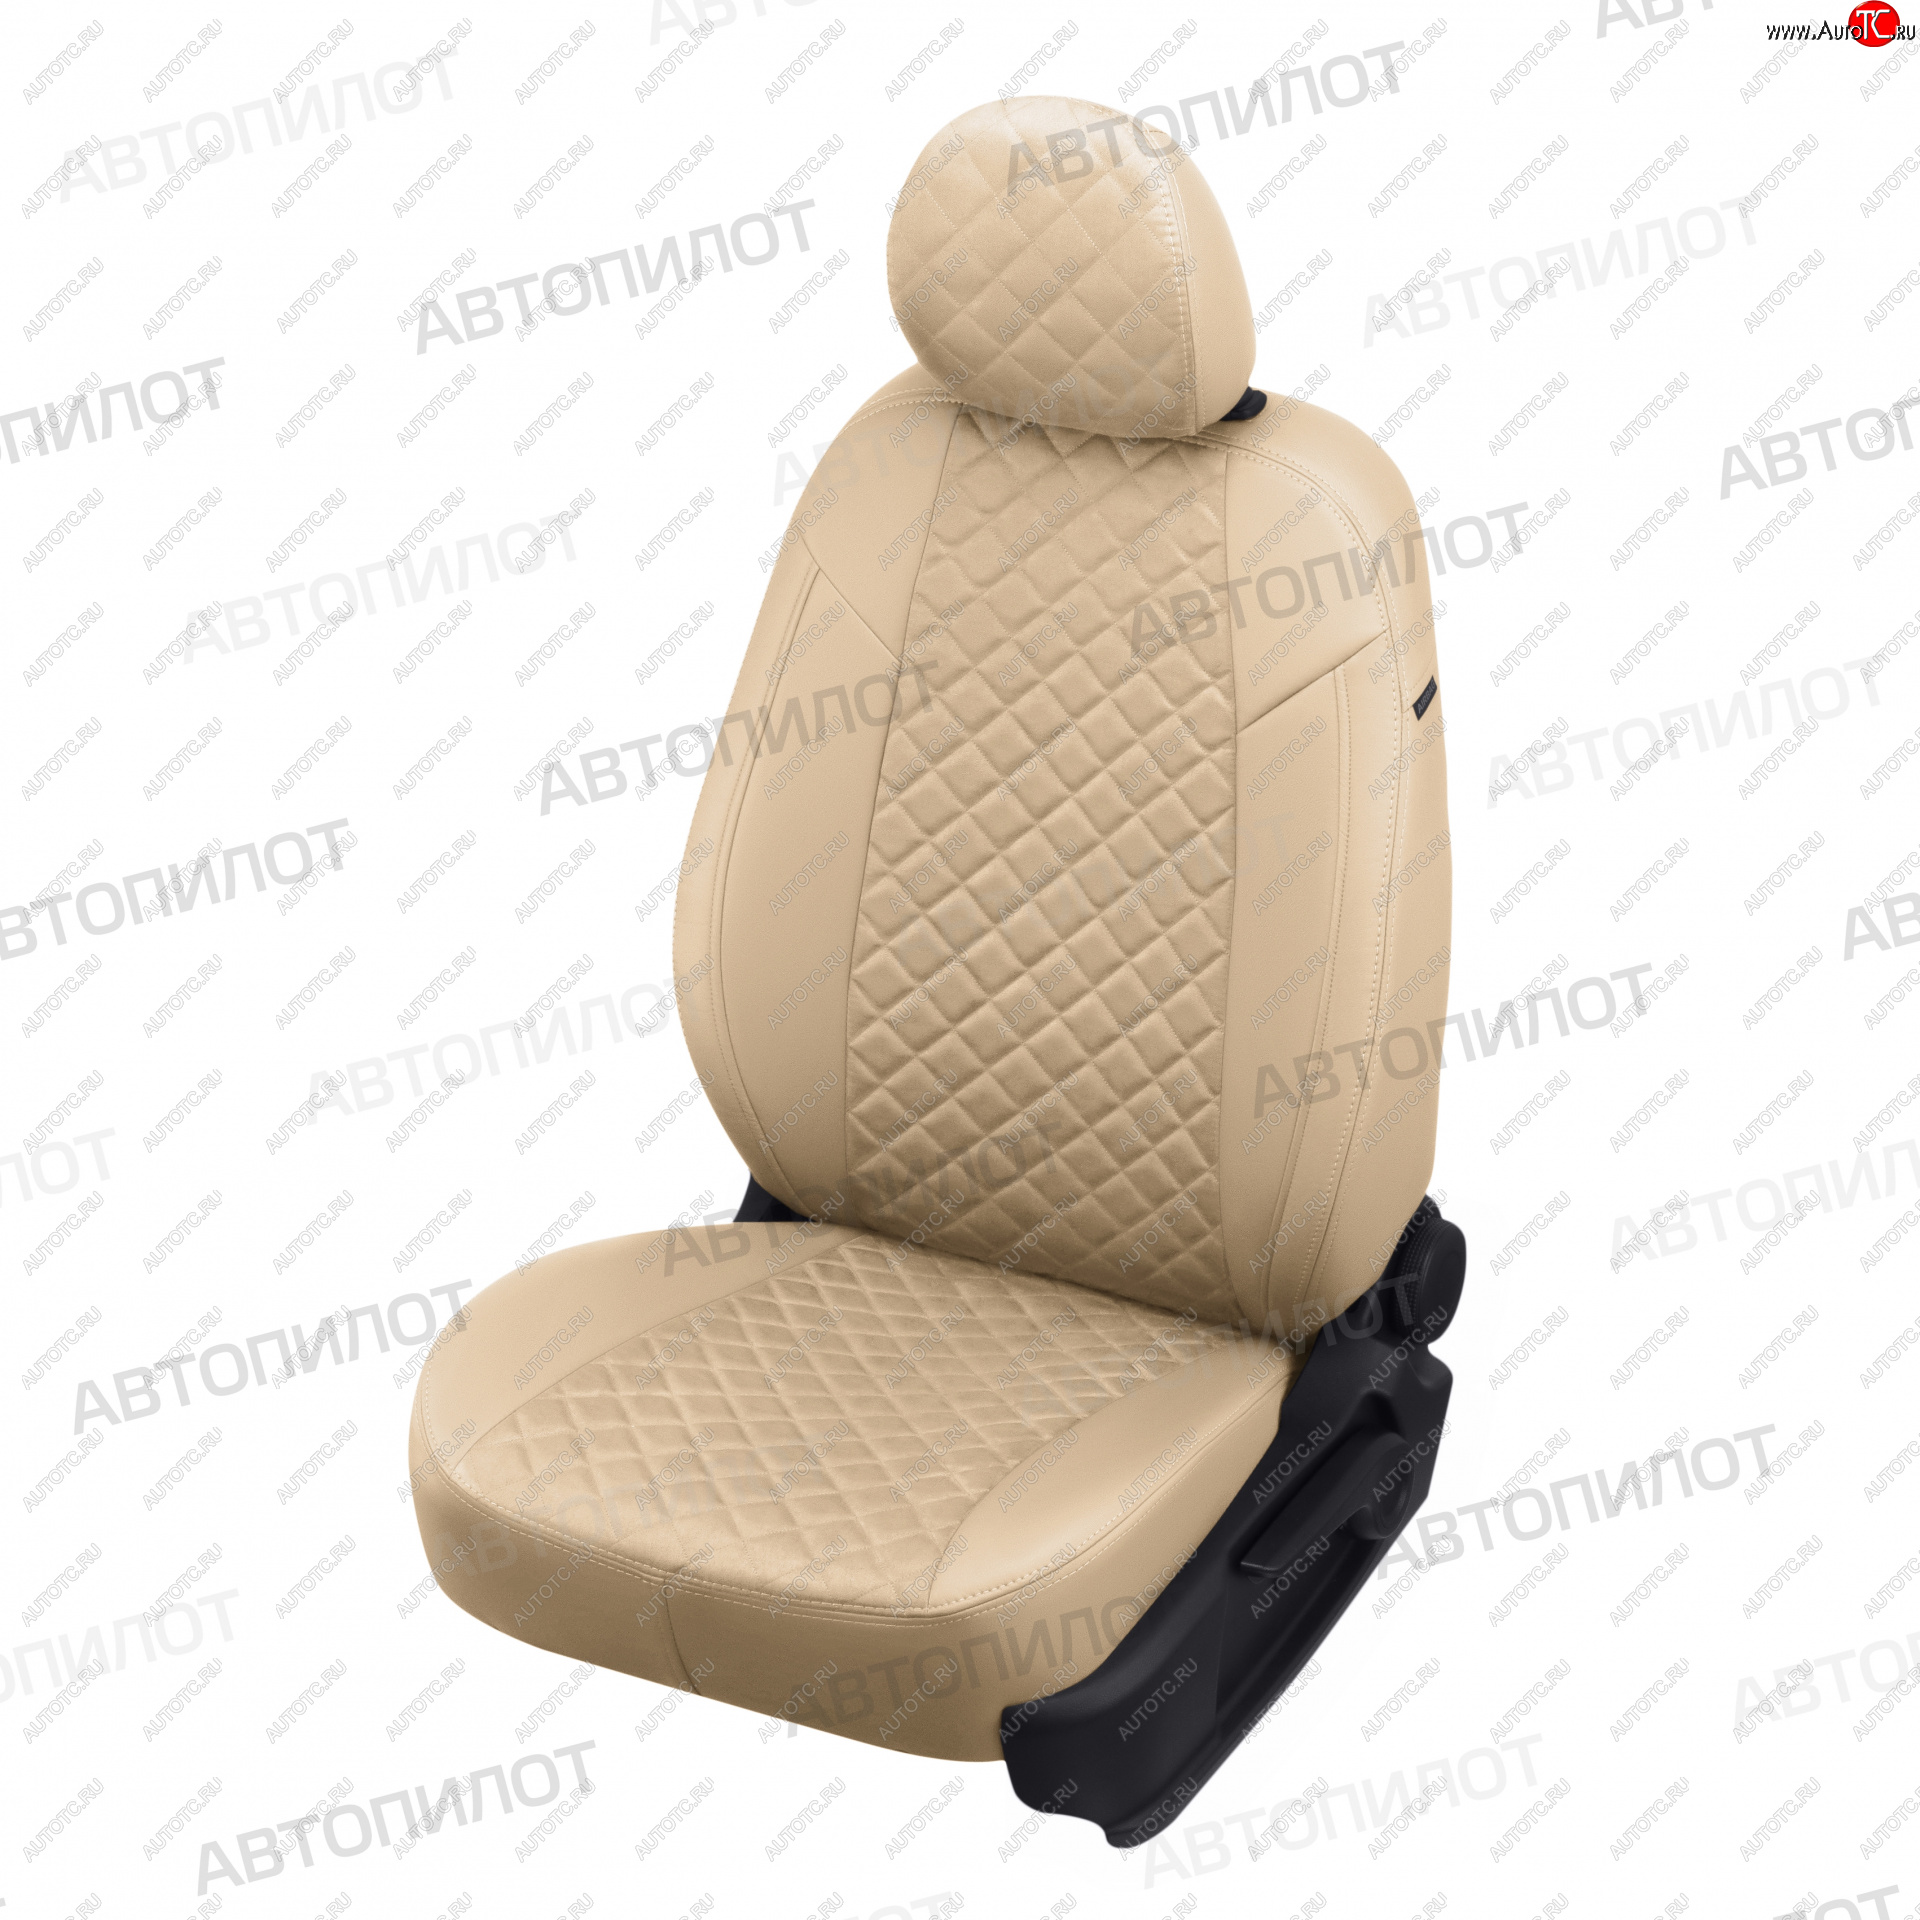 13 999 р. Чехлы сидений (экокожа/алькантара) Автопилот Ромб  Ford Fiesta  6 (2008-2019) (бежевый)